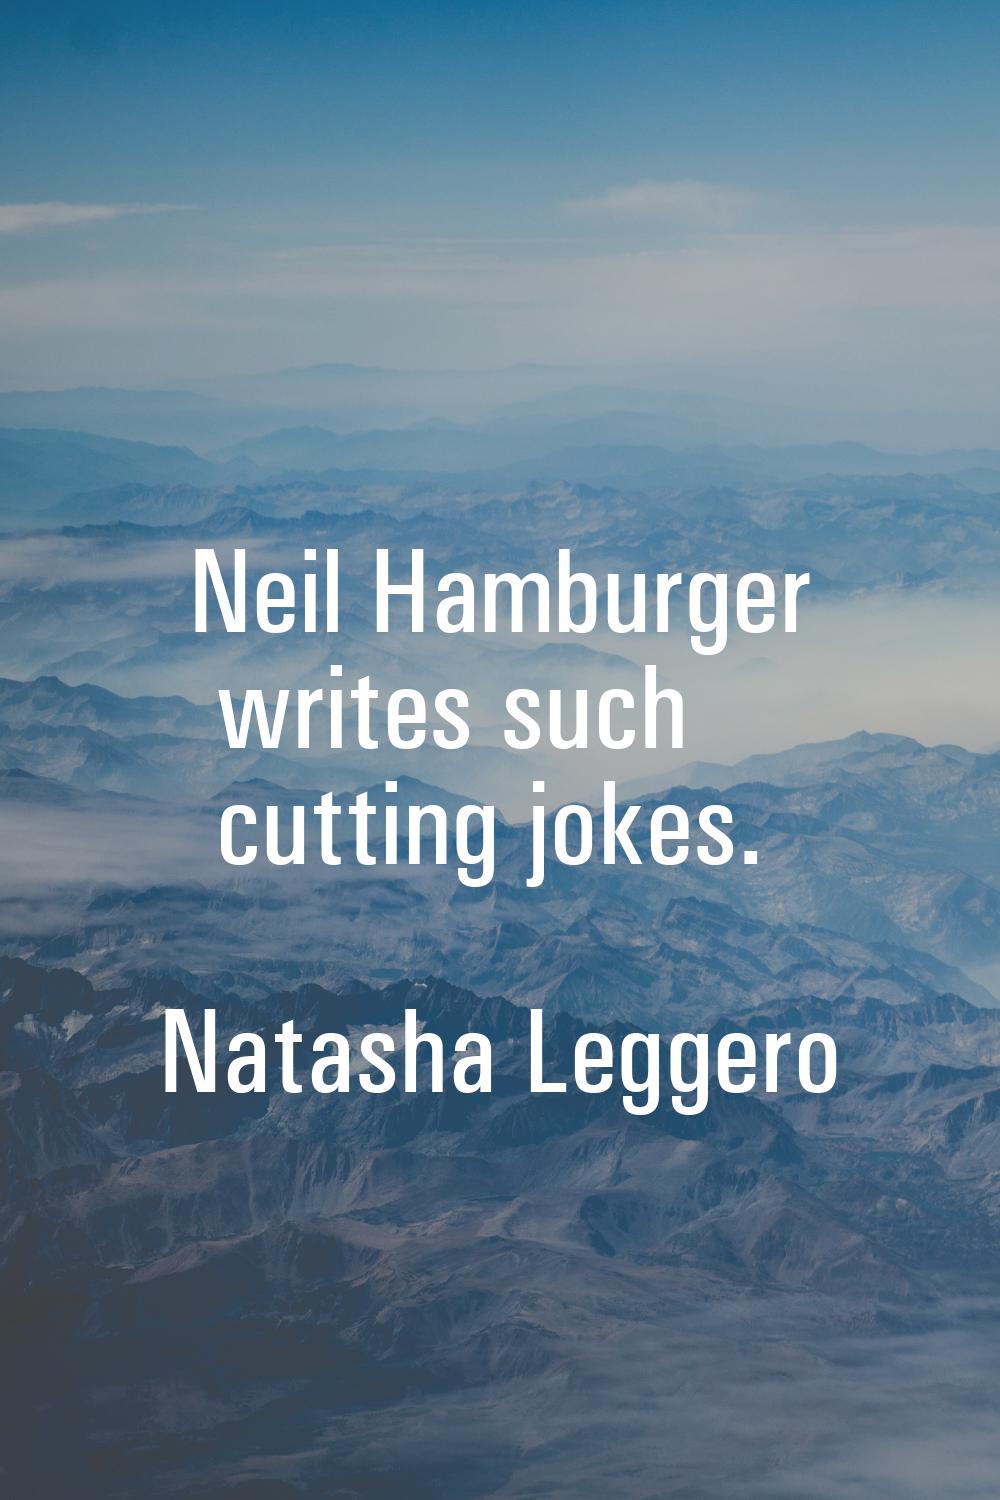 Neil Hamburger writes such cutting jokes.